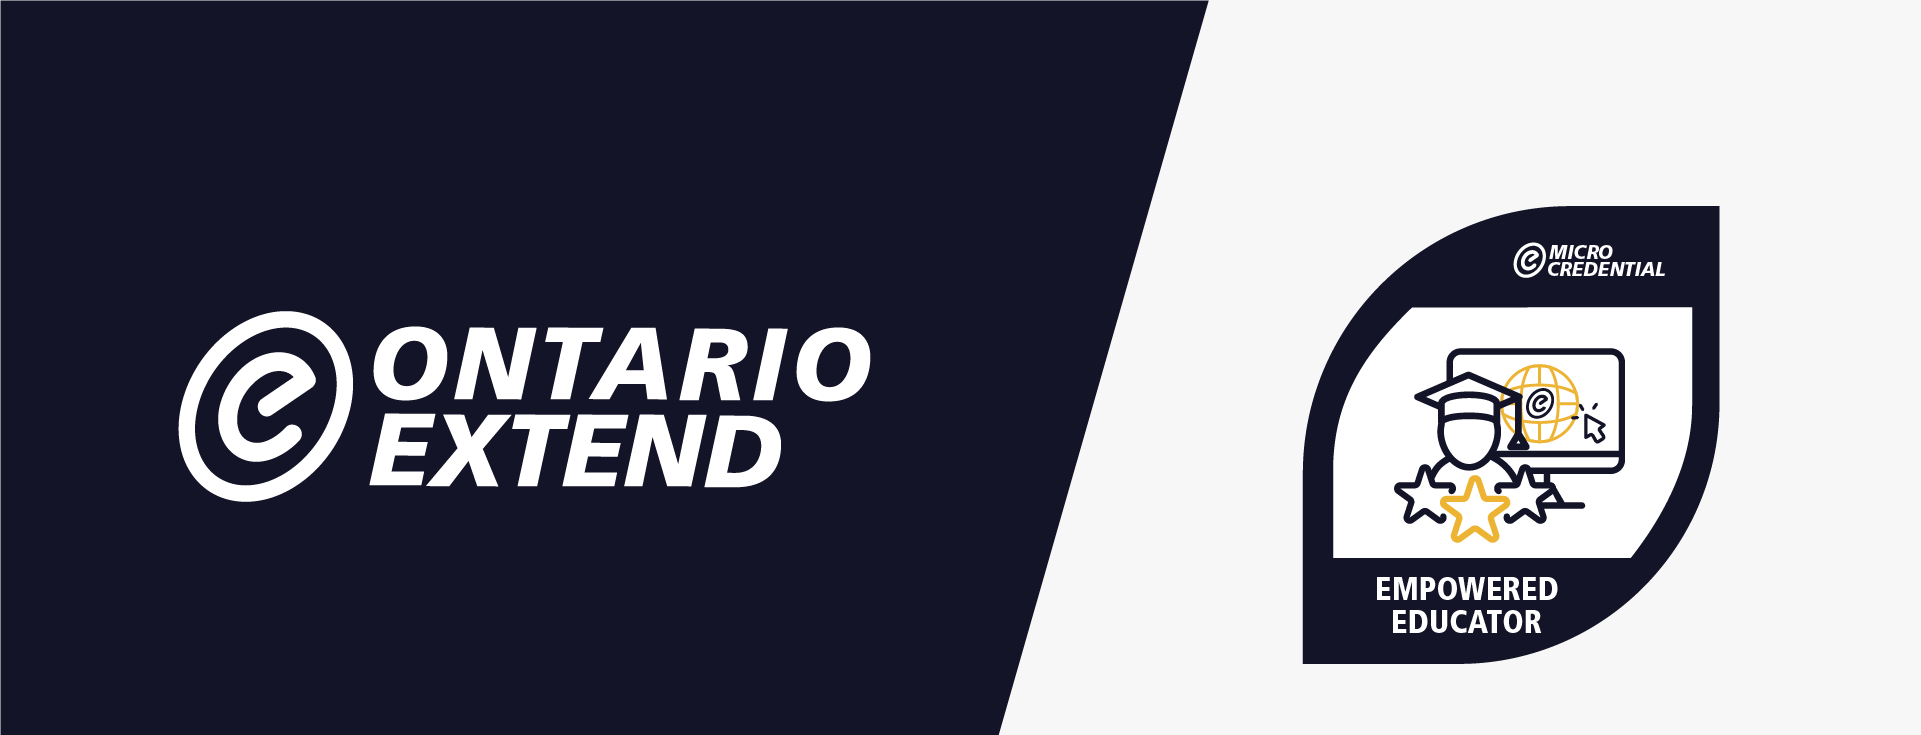 Ontario Extend logo with a micro-credential